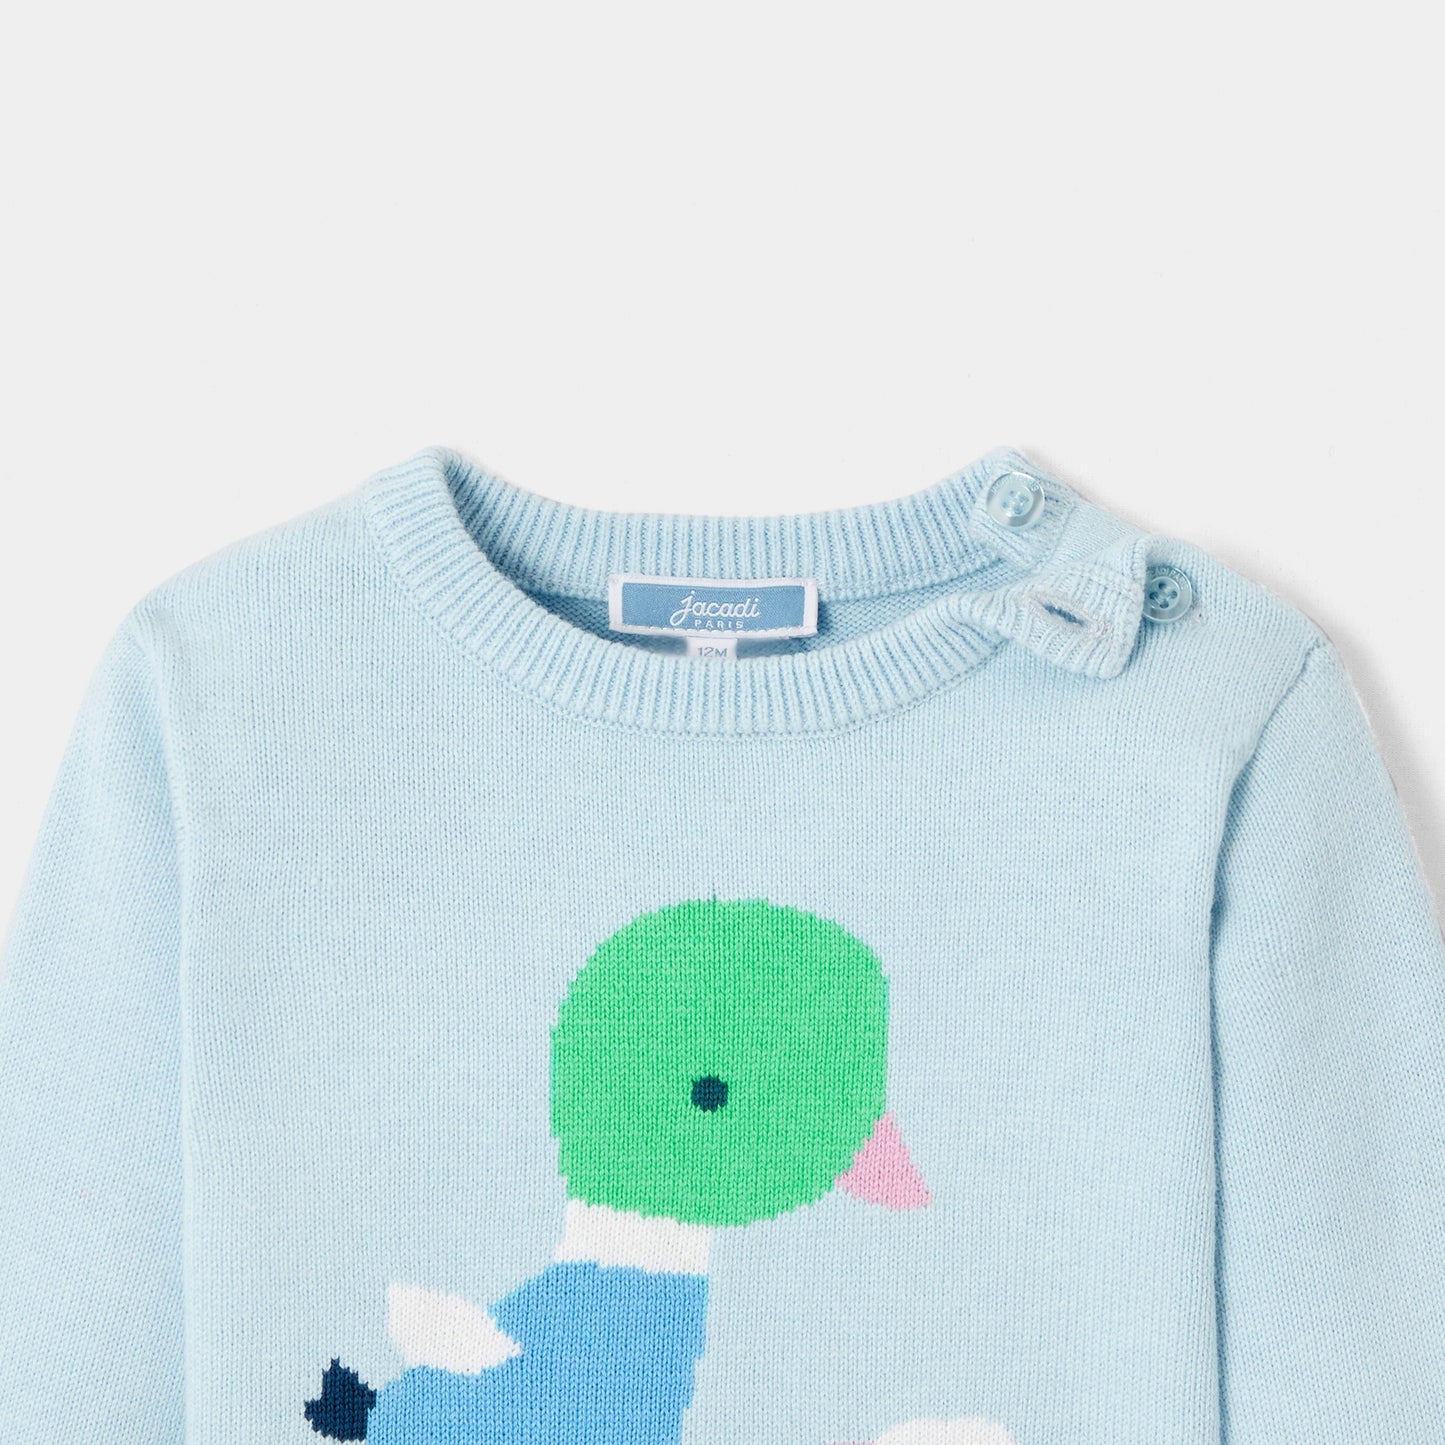 jacadi LOUISETTE - デザイン入りセーター